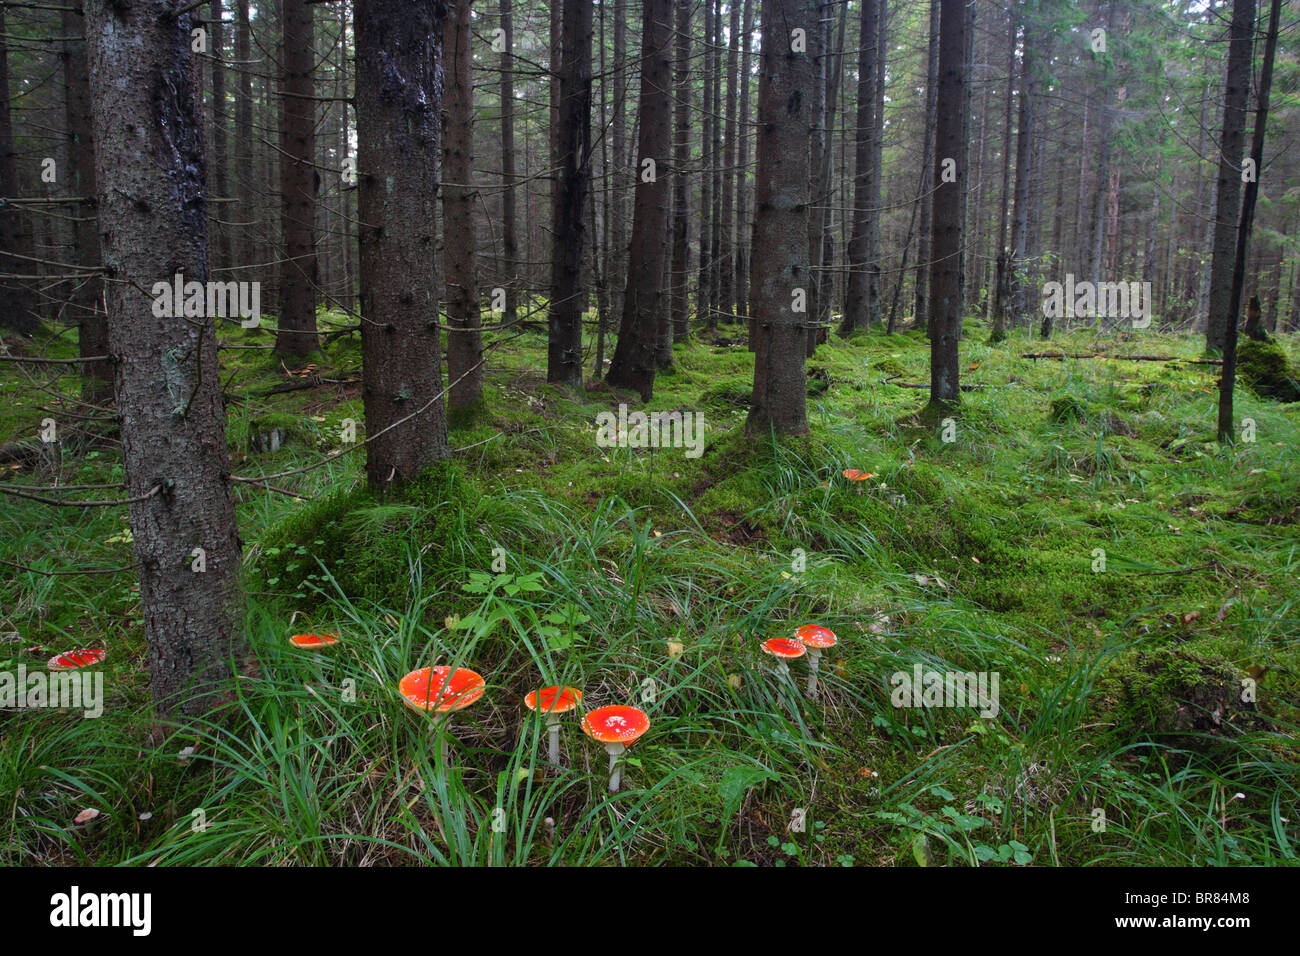 Group of Fly Agaric Mushrooms (Amanita muscaria) in fir forest habitat. Estonia, Europe Stock Photo